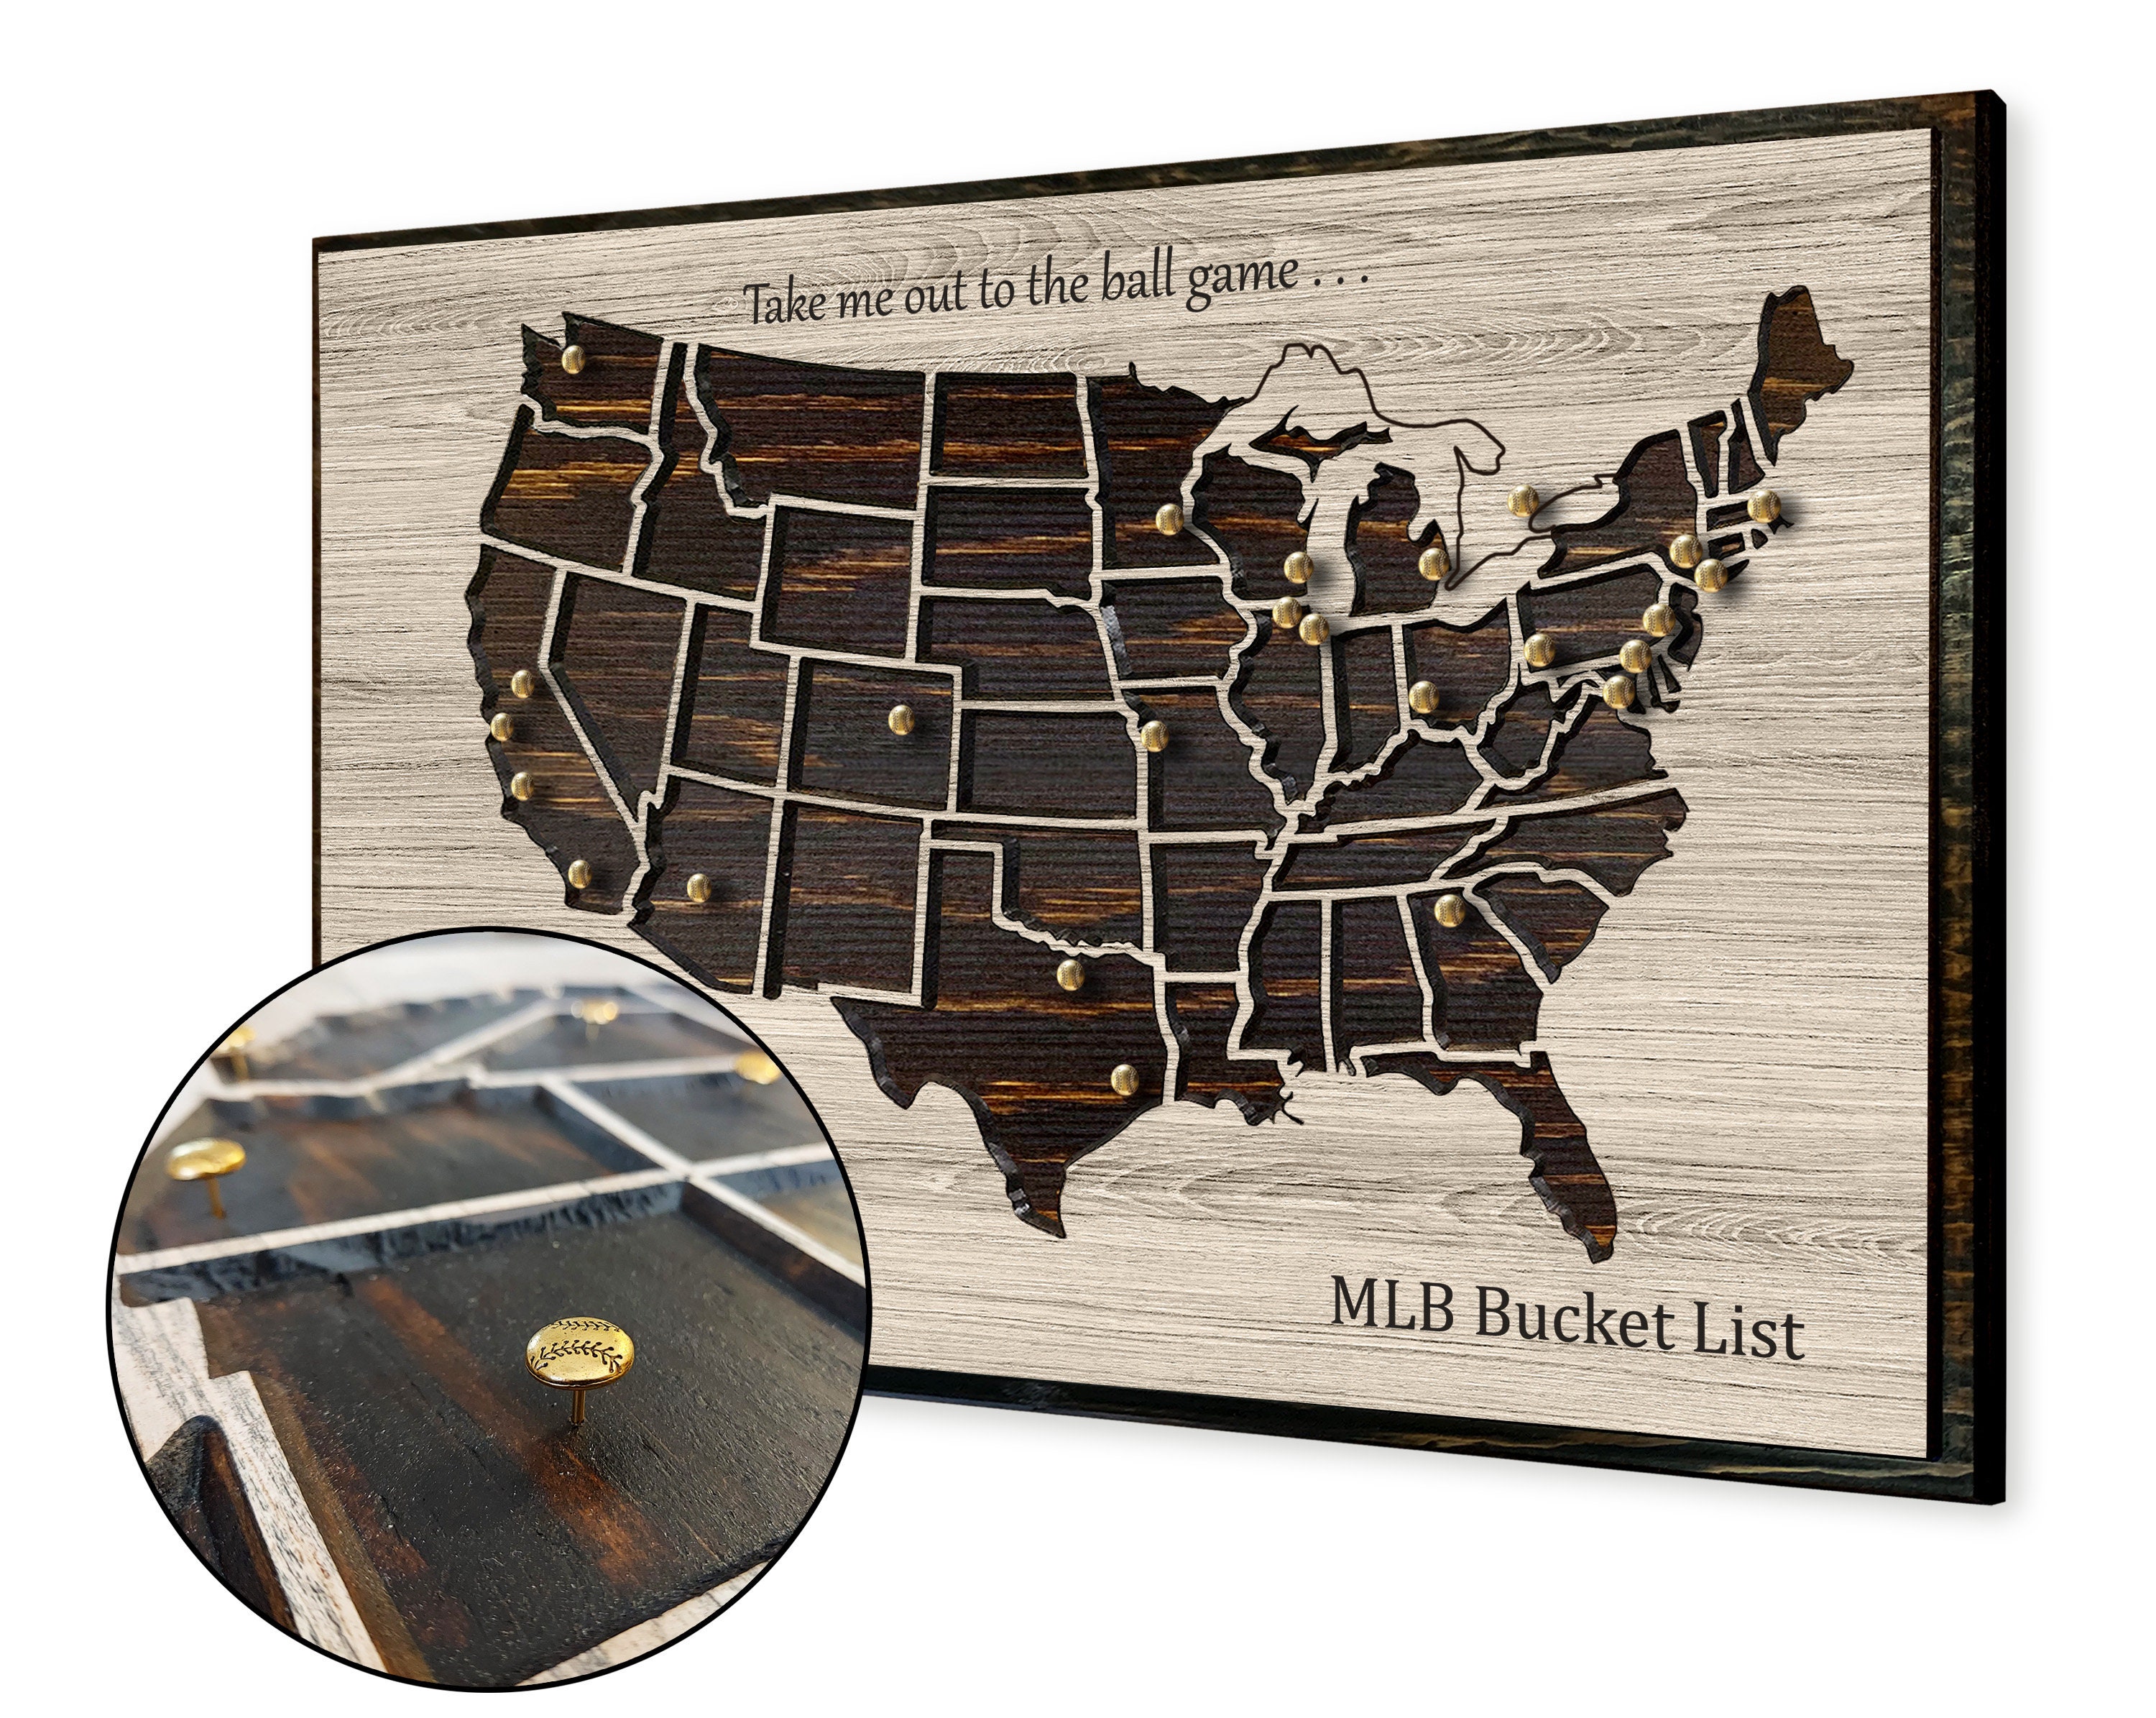 Mlb Bucket List Map, Major League Baseball Ball Park Tour Us Stadium Travels, Push Pin Map To Mark Stadiums Visited